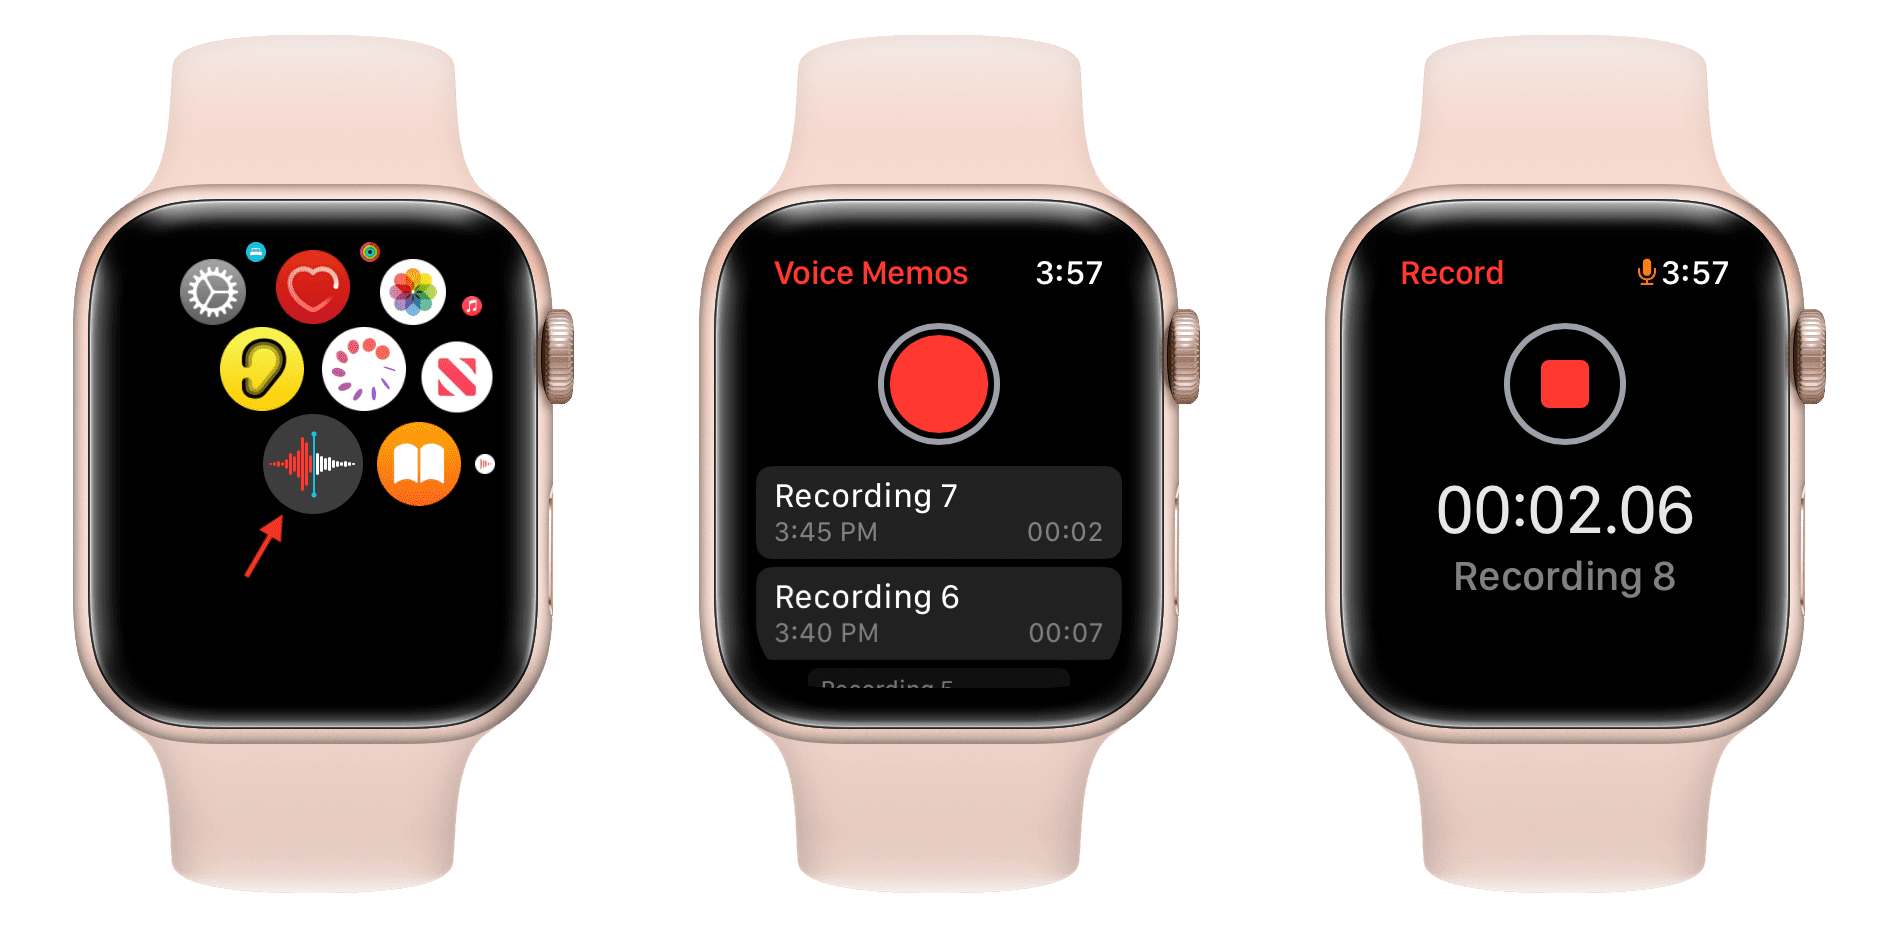 Using Voice Memos app on Apple Watch to record audio